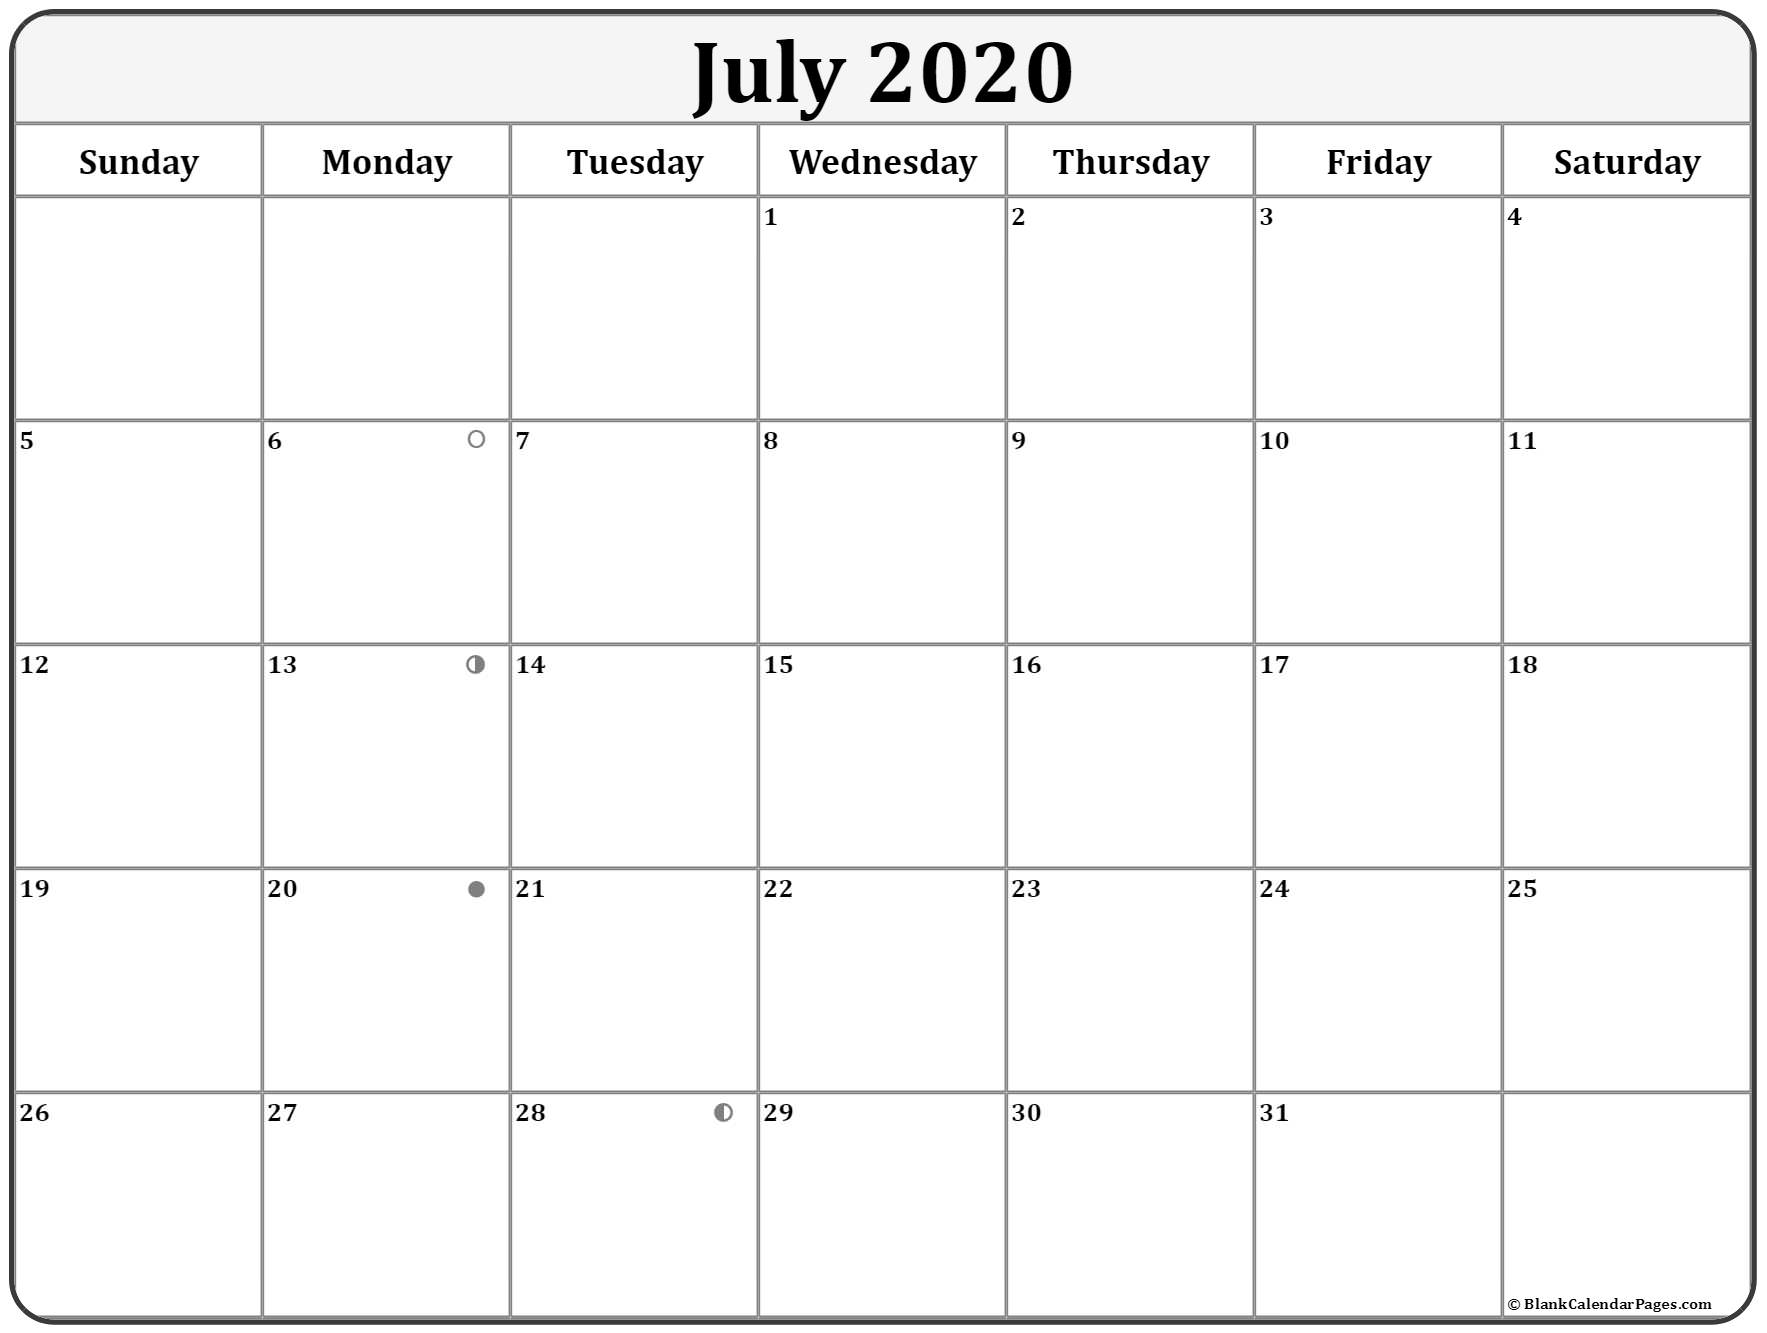 July 2020 moon calendar